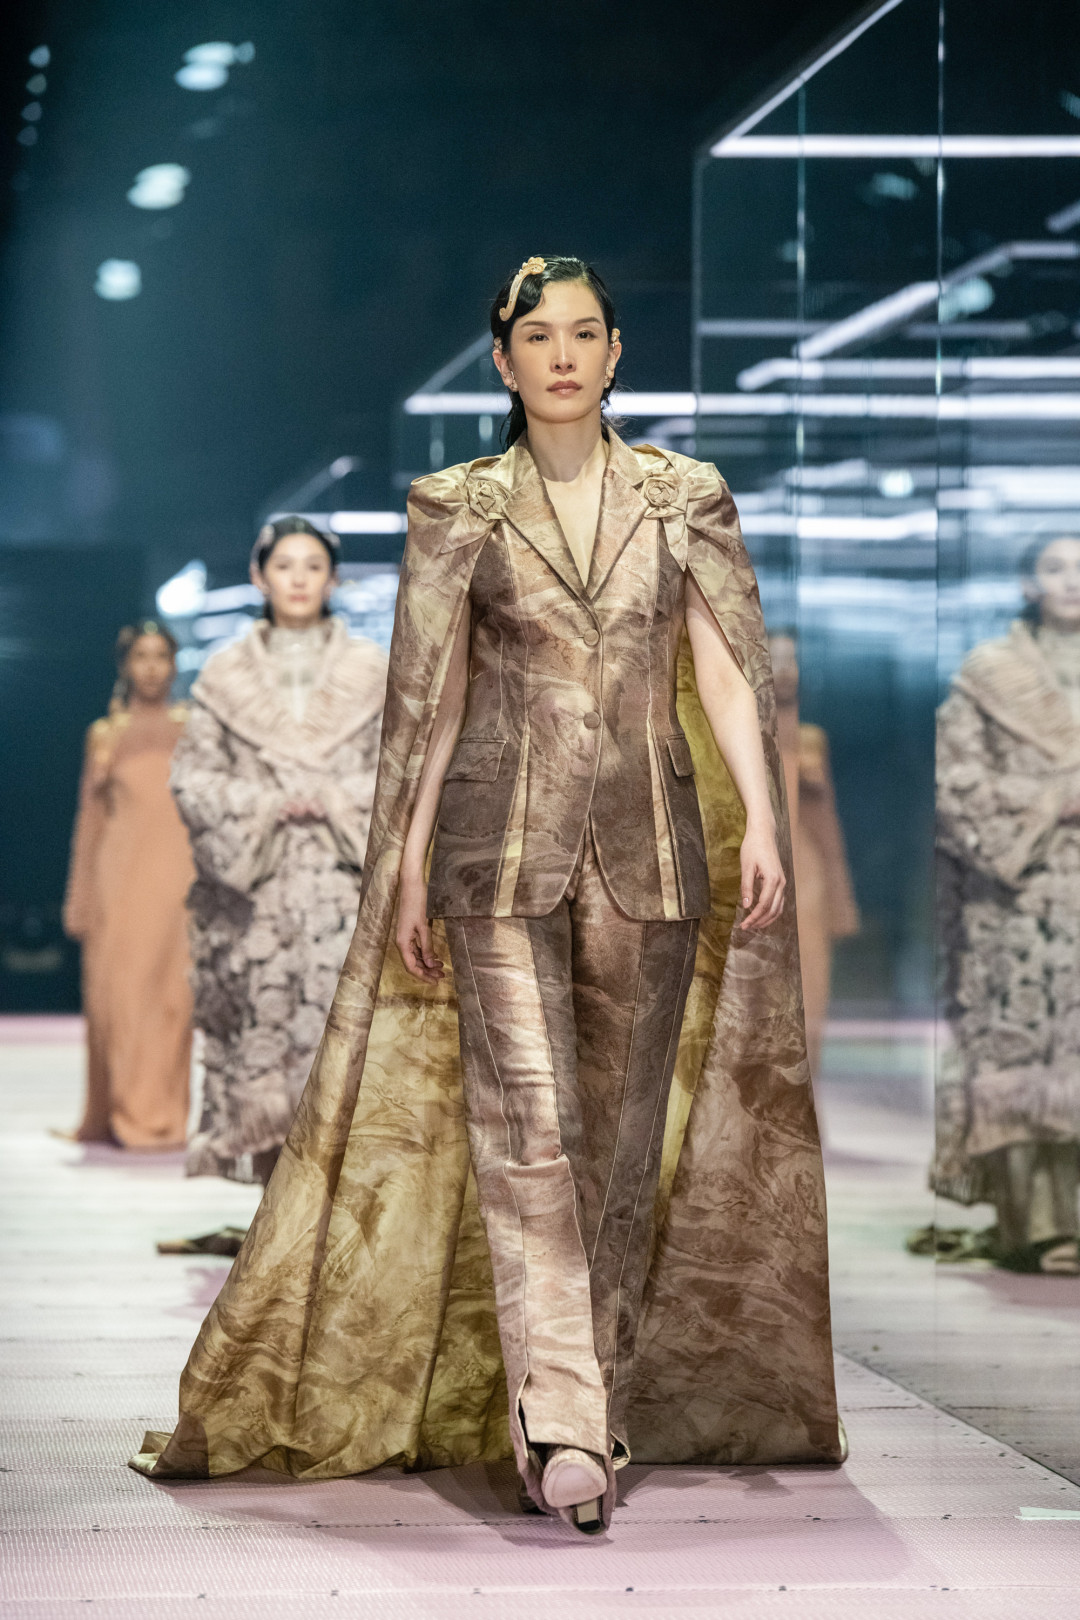 FENDI Shanghai Couture_SS21_17 Tong Chenjie